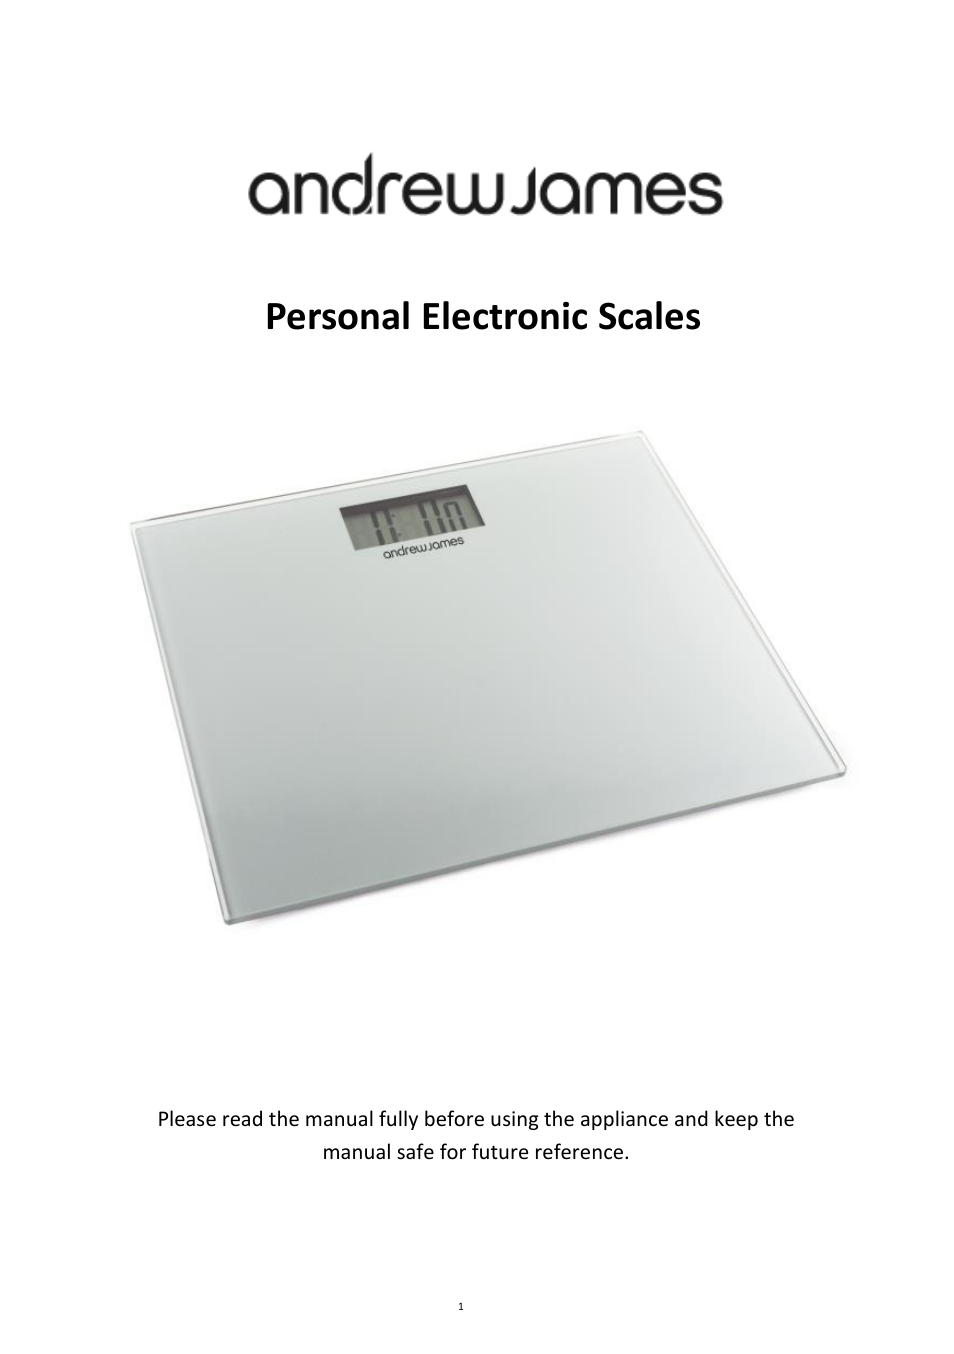 AJ000556 Electronic Personal Scales